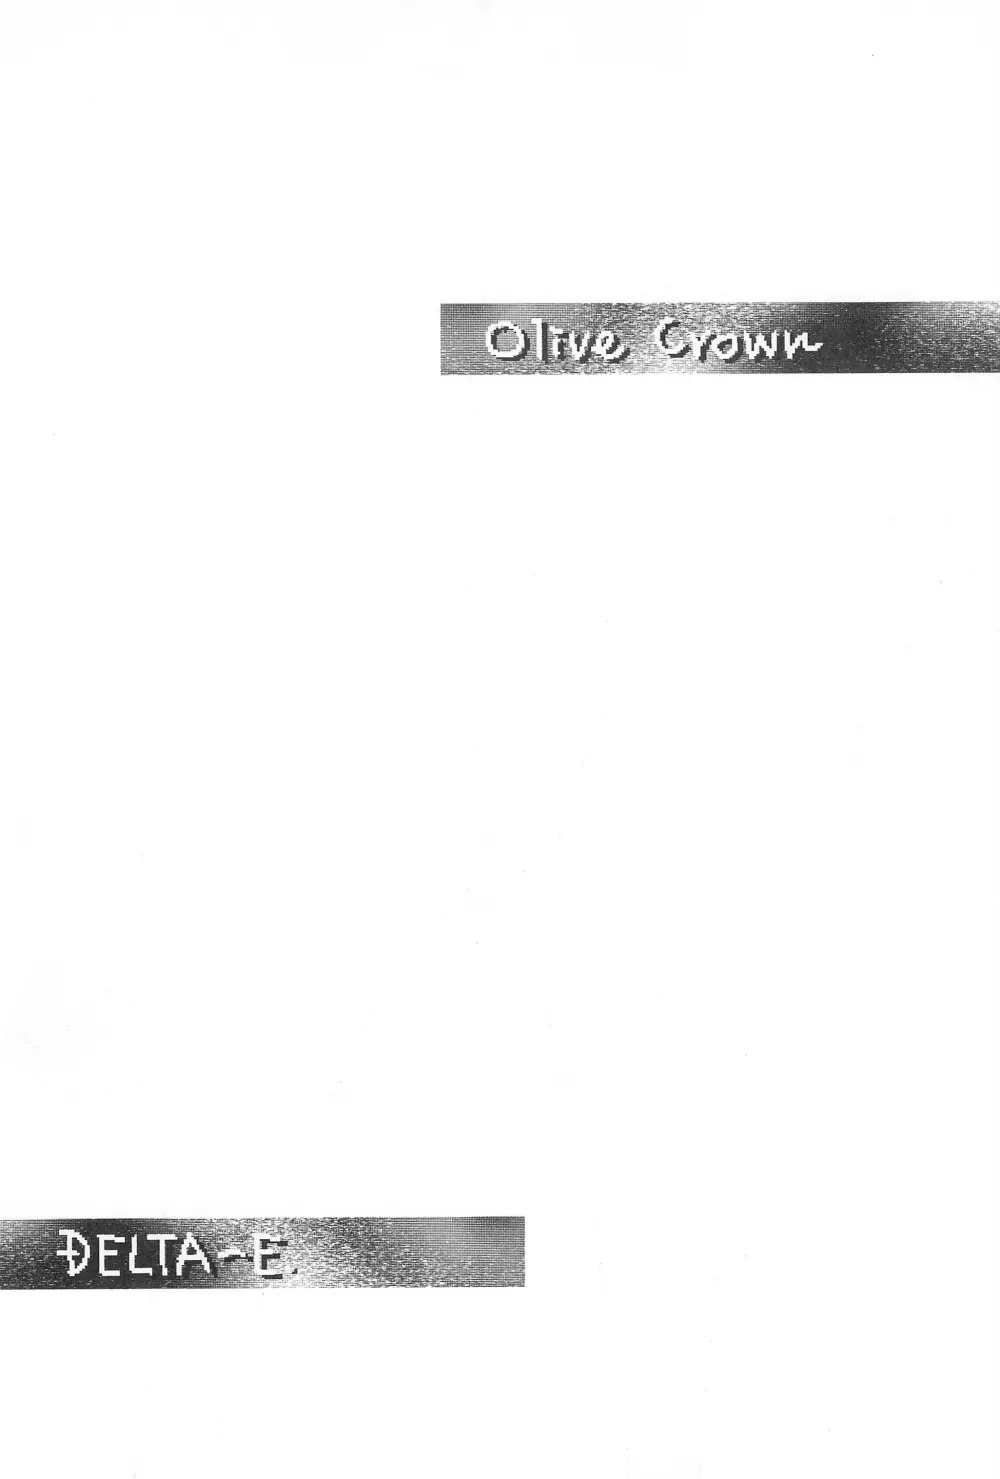 Olive Crown 6ページ